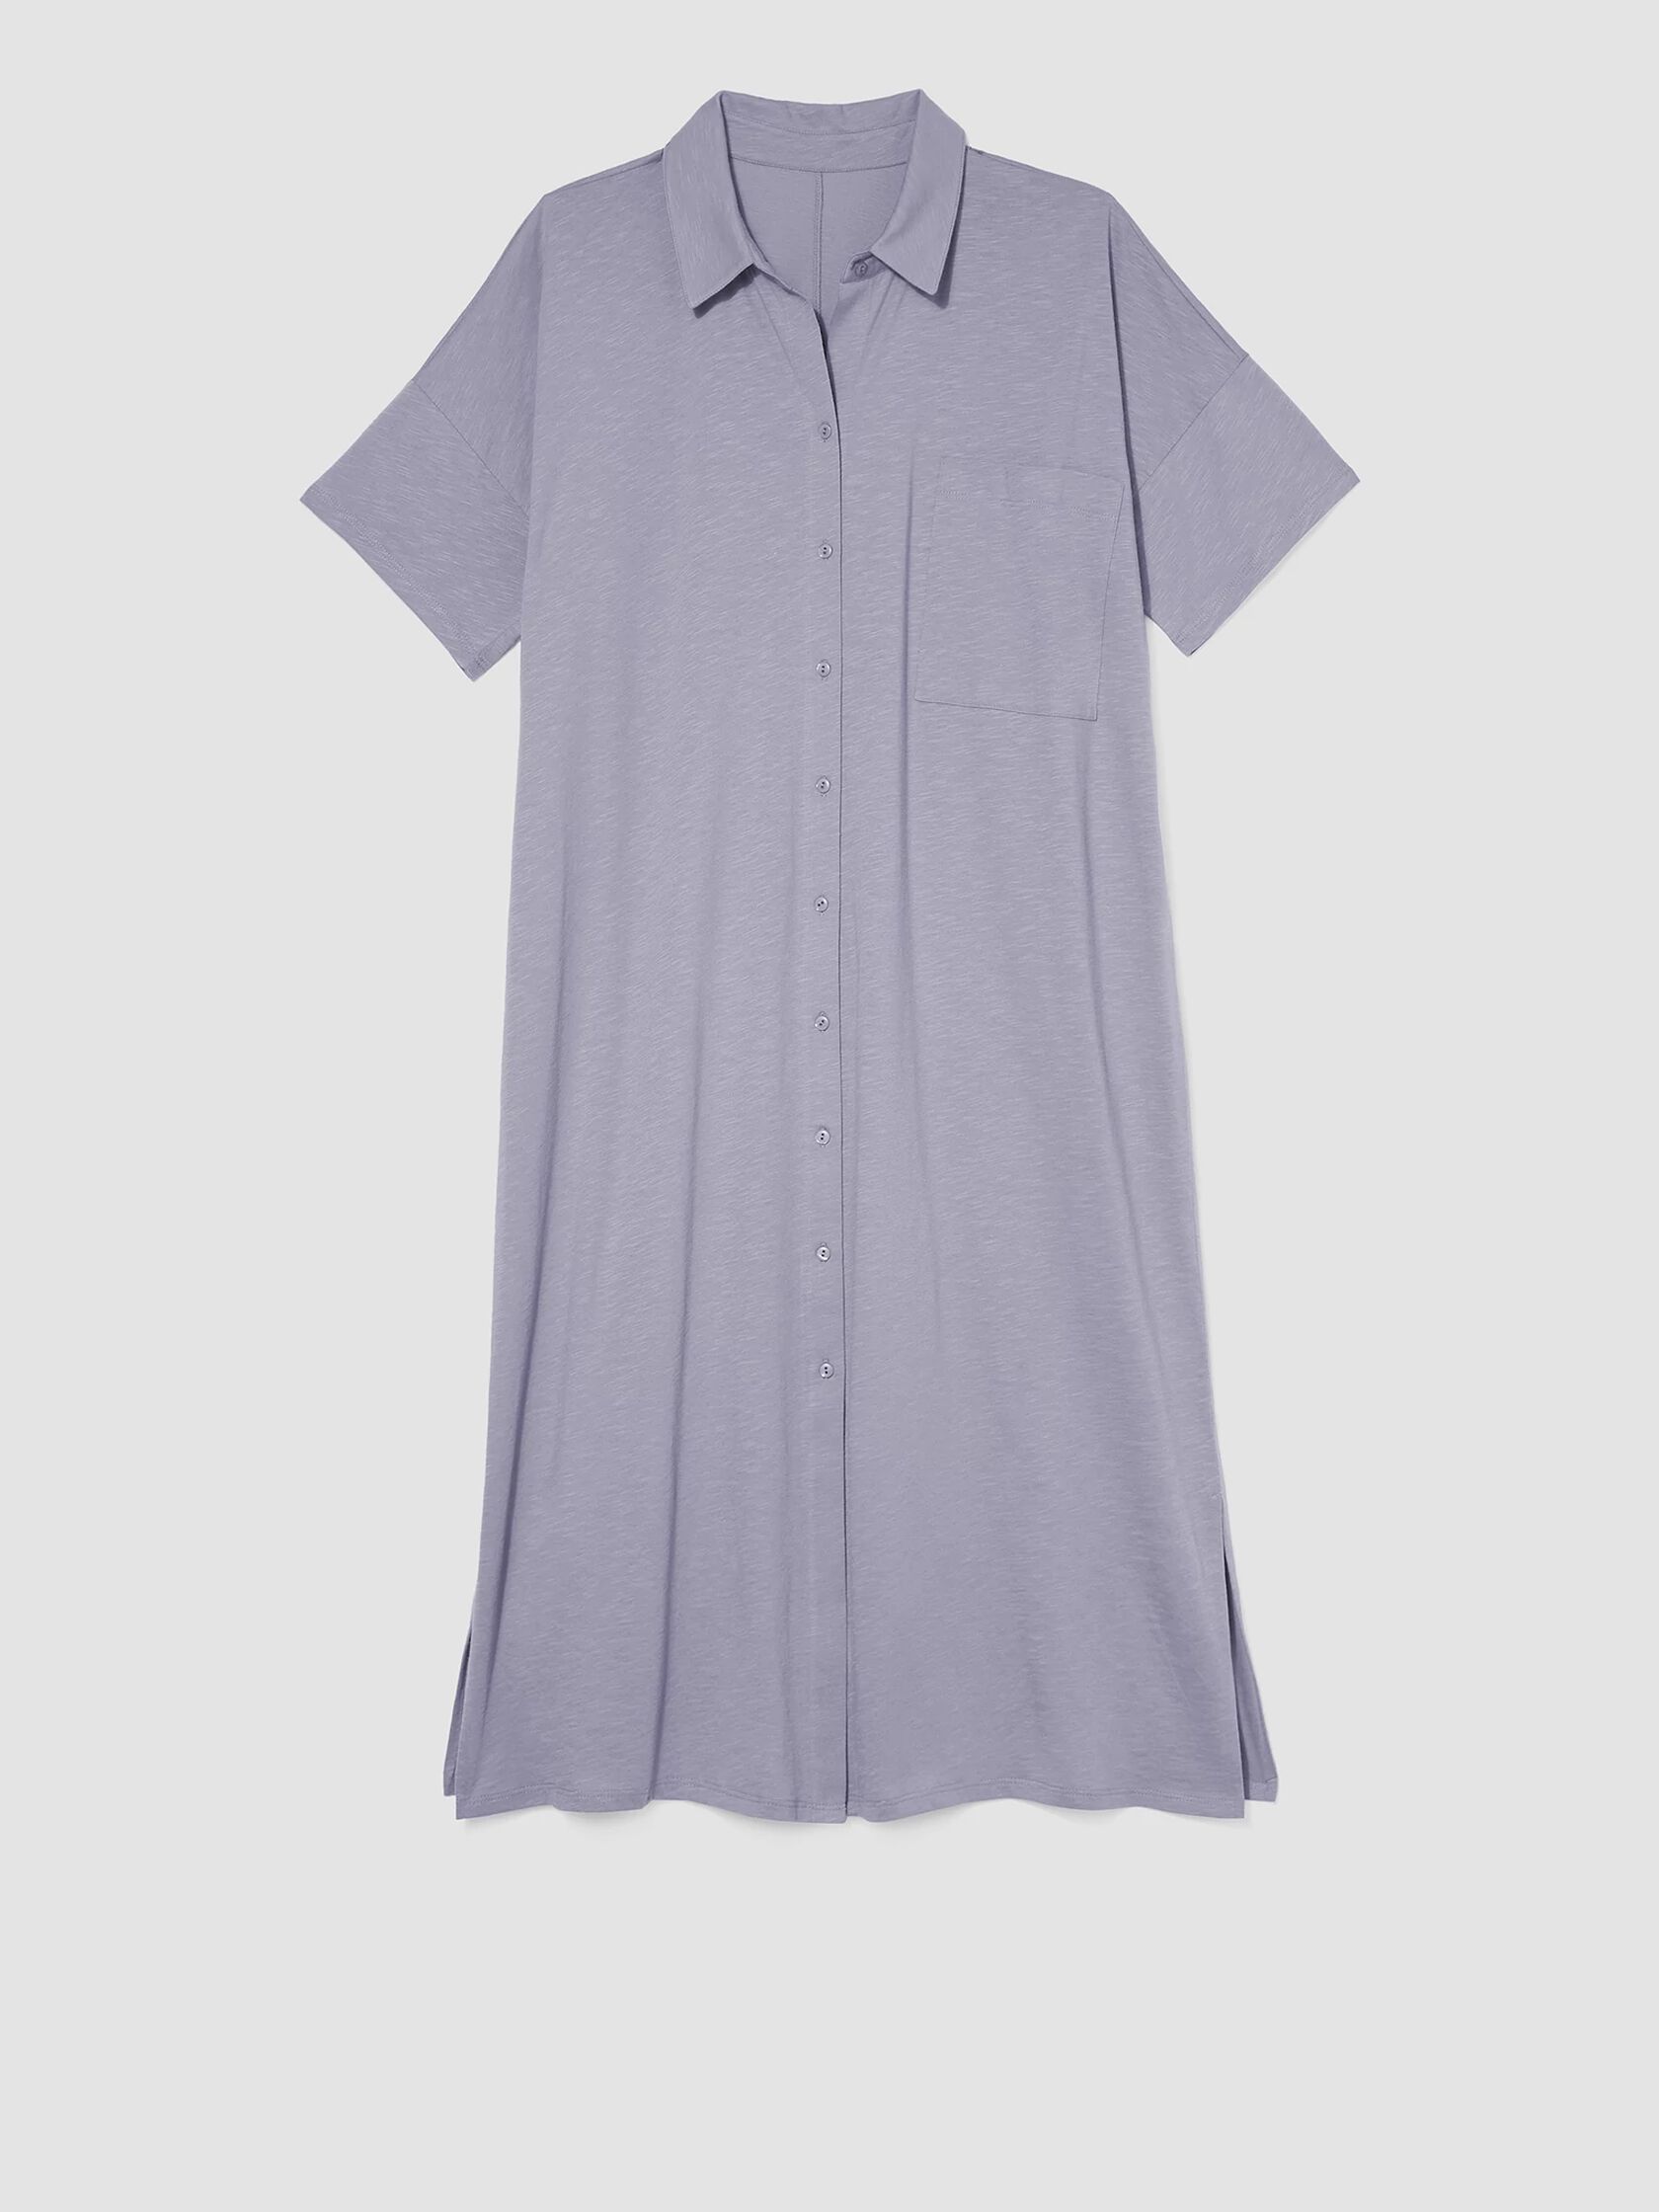 Slubby Organic Cotton Classic Collar Sleep Dress